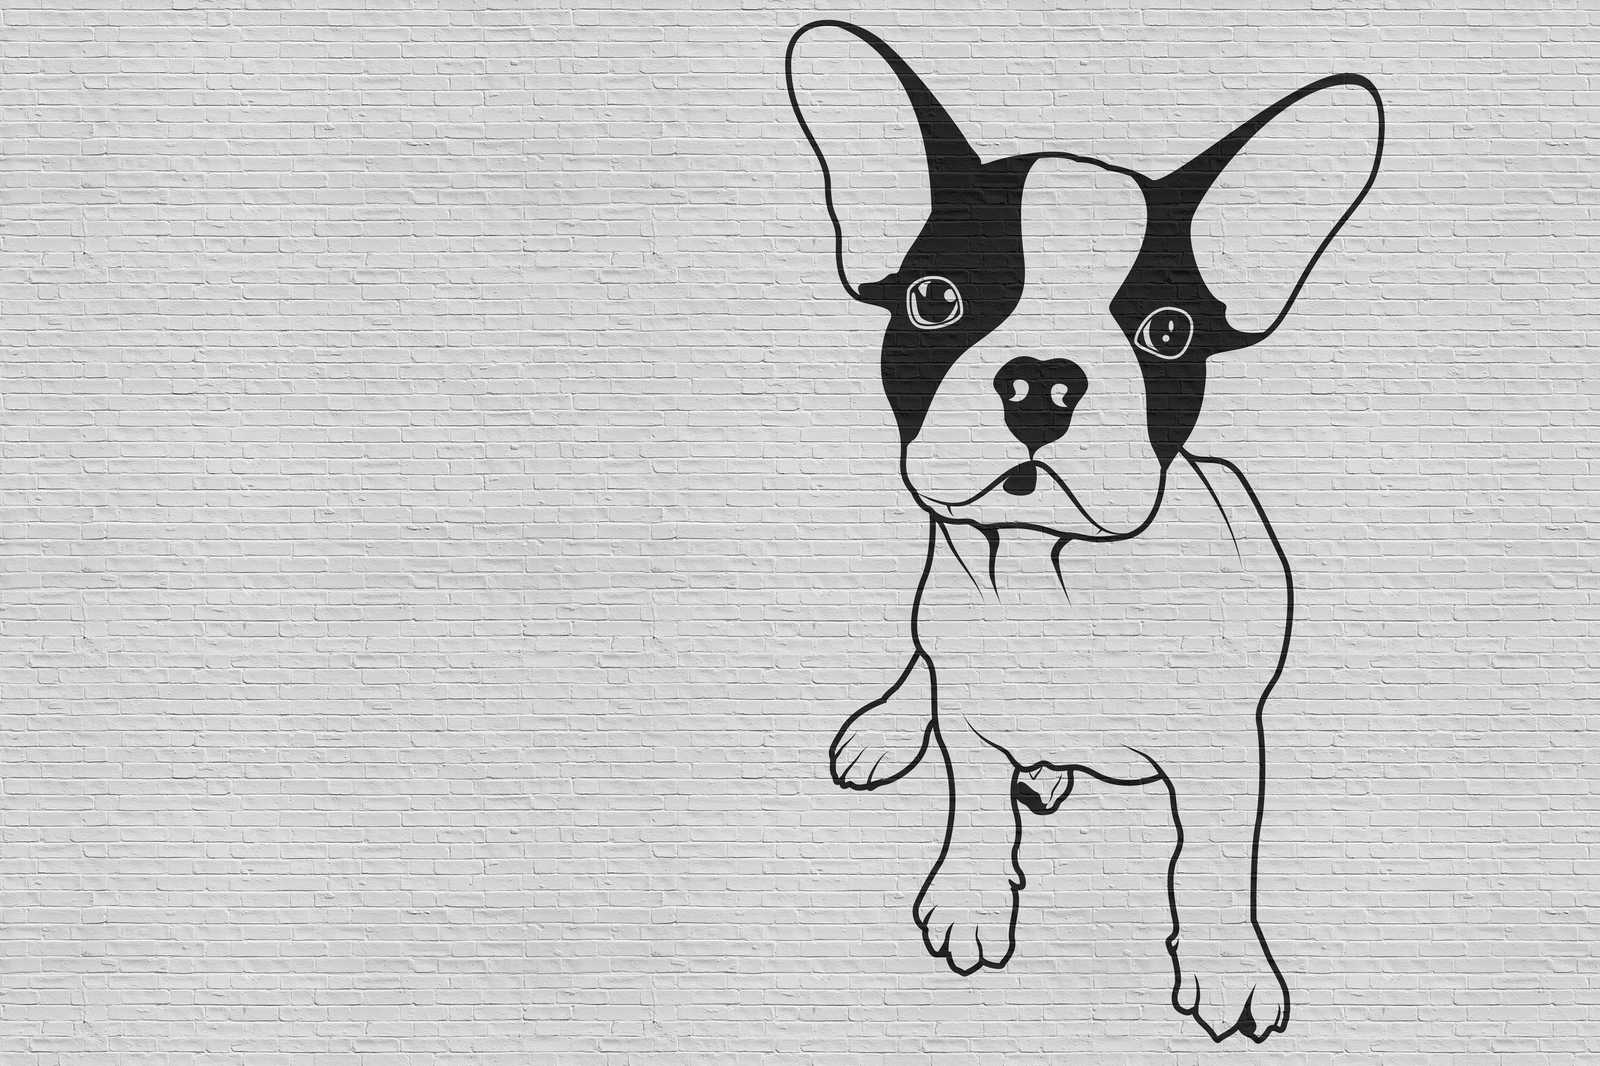             Tattoo you 2 - Tela dipinta con bulldog francese, bianco e nero - 0,90 m x 0,60 m
        